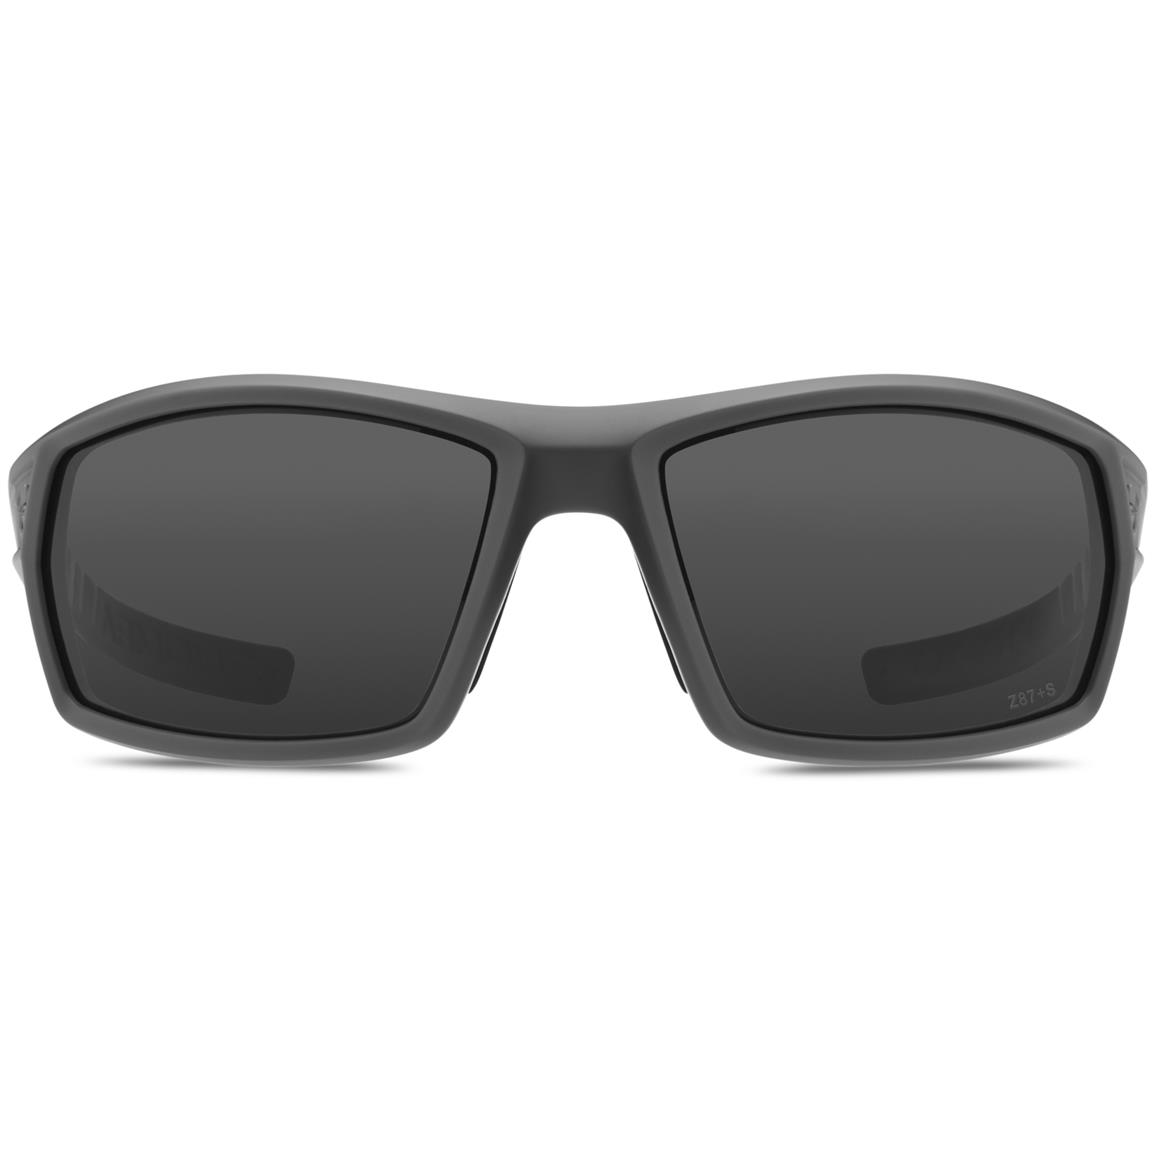 Under Armour Ranger Sunglasses - 641533, Sunglasses & Eyewear at ...